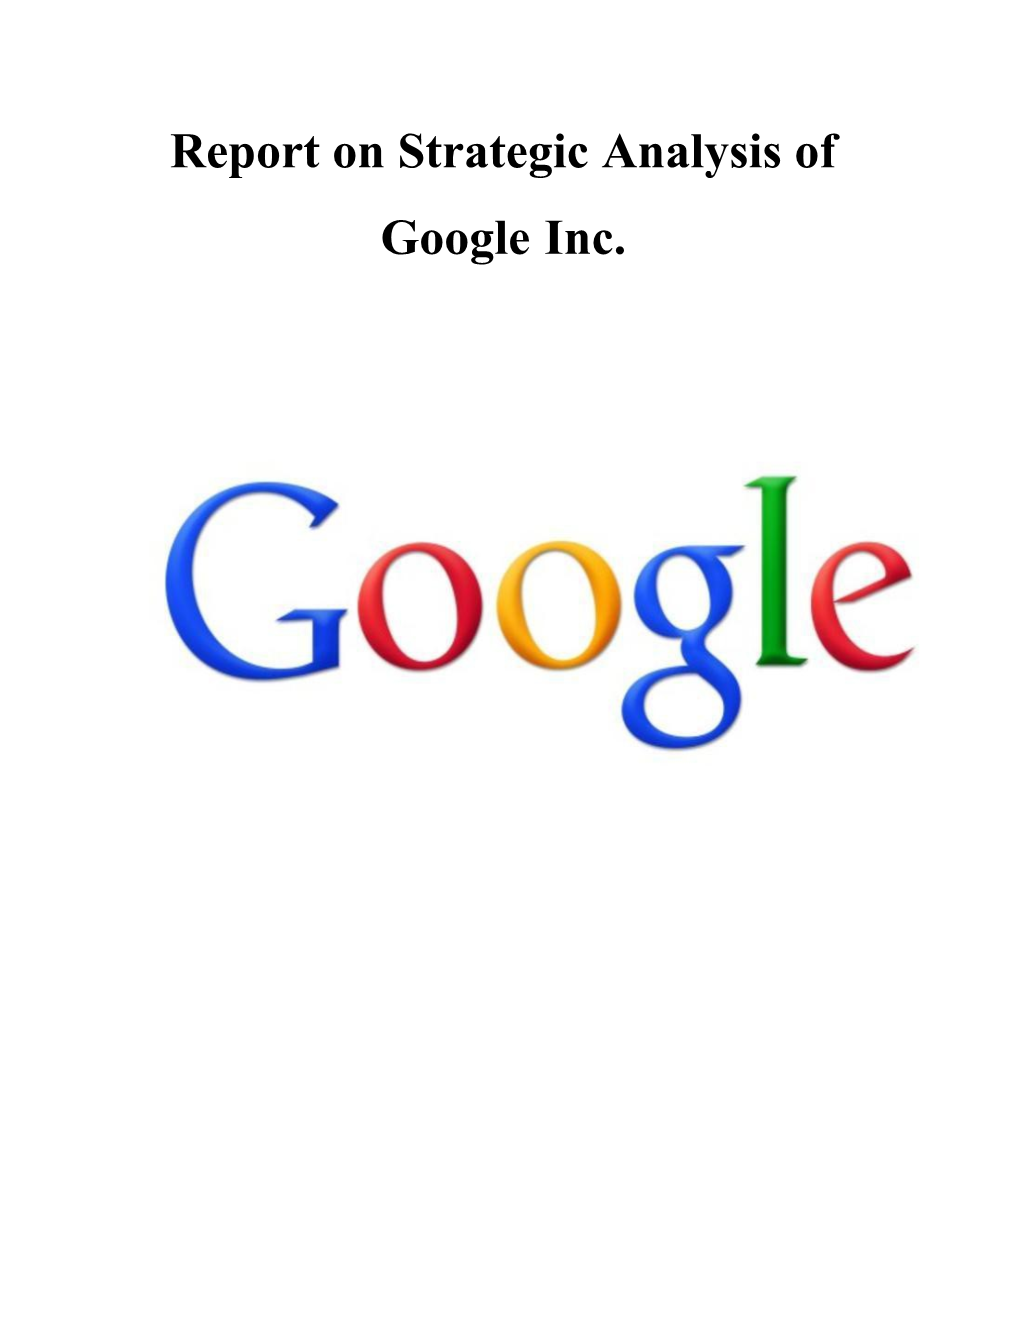 Strategic Analysis of Google Inc